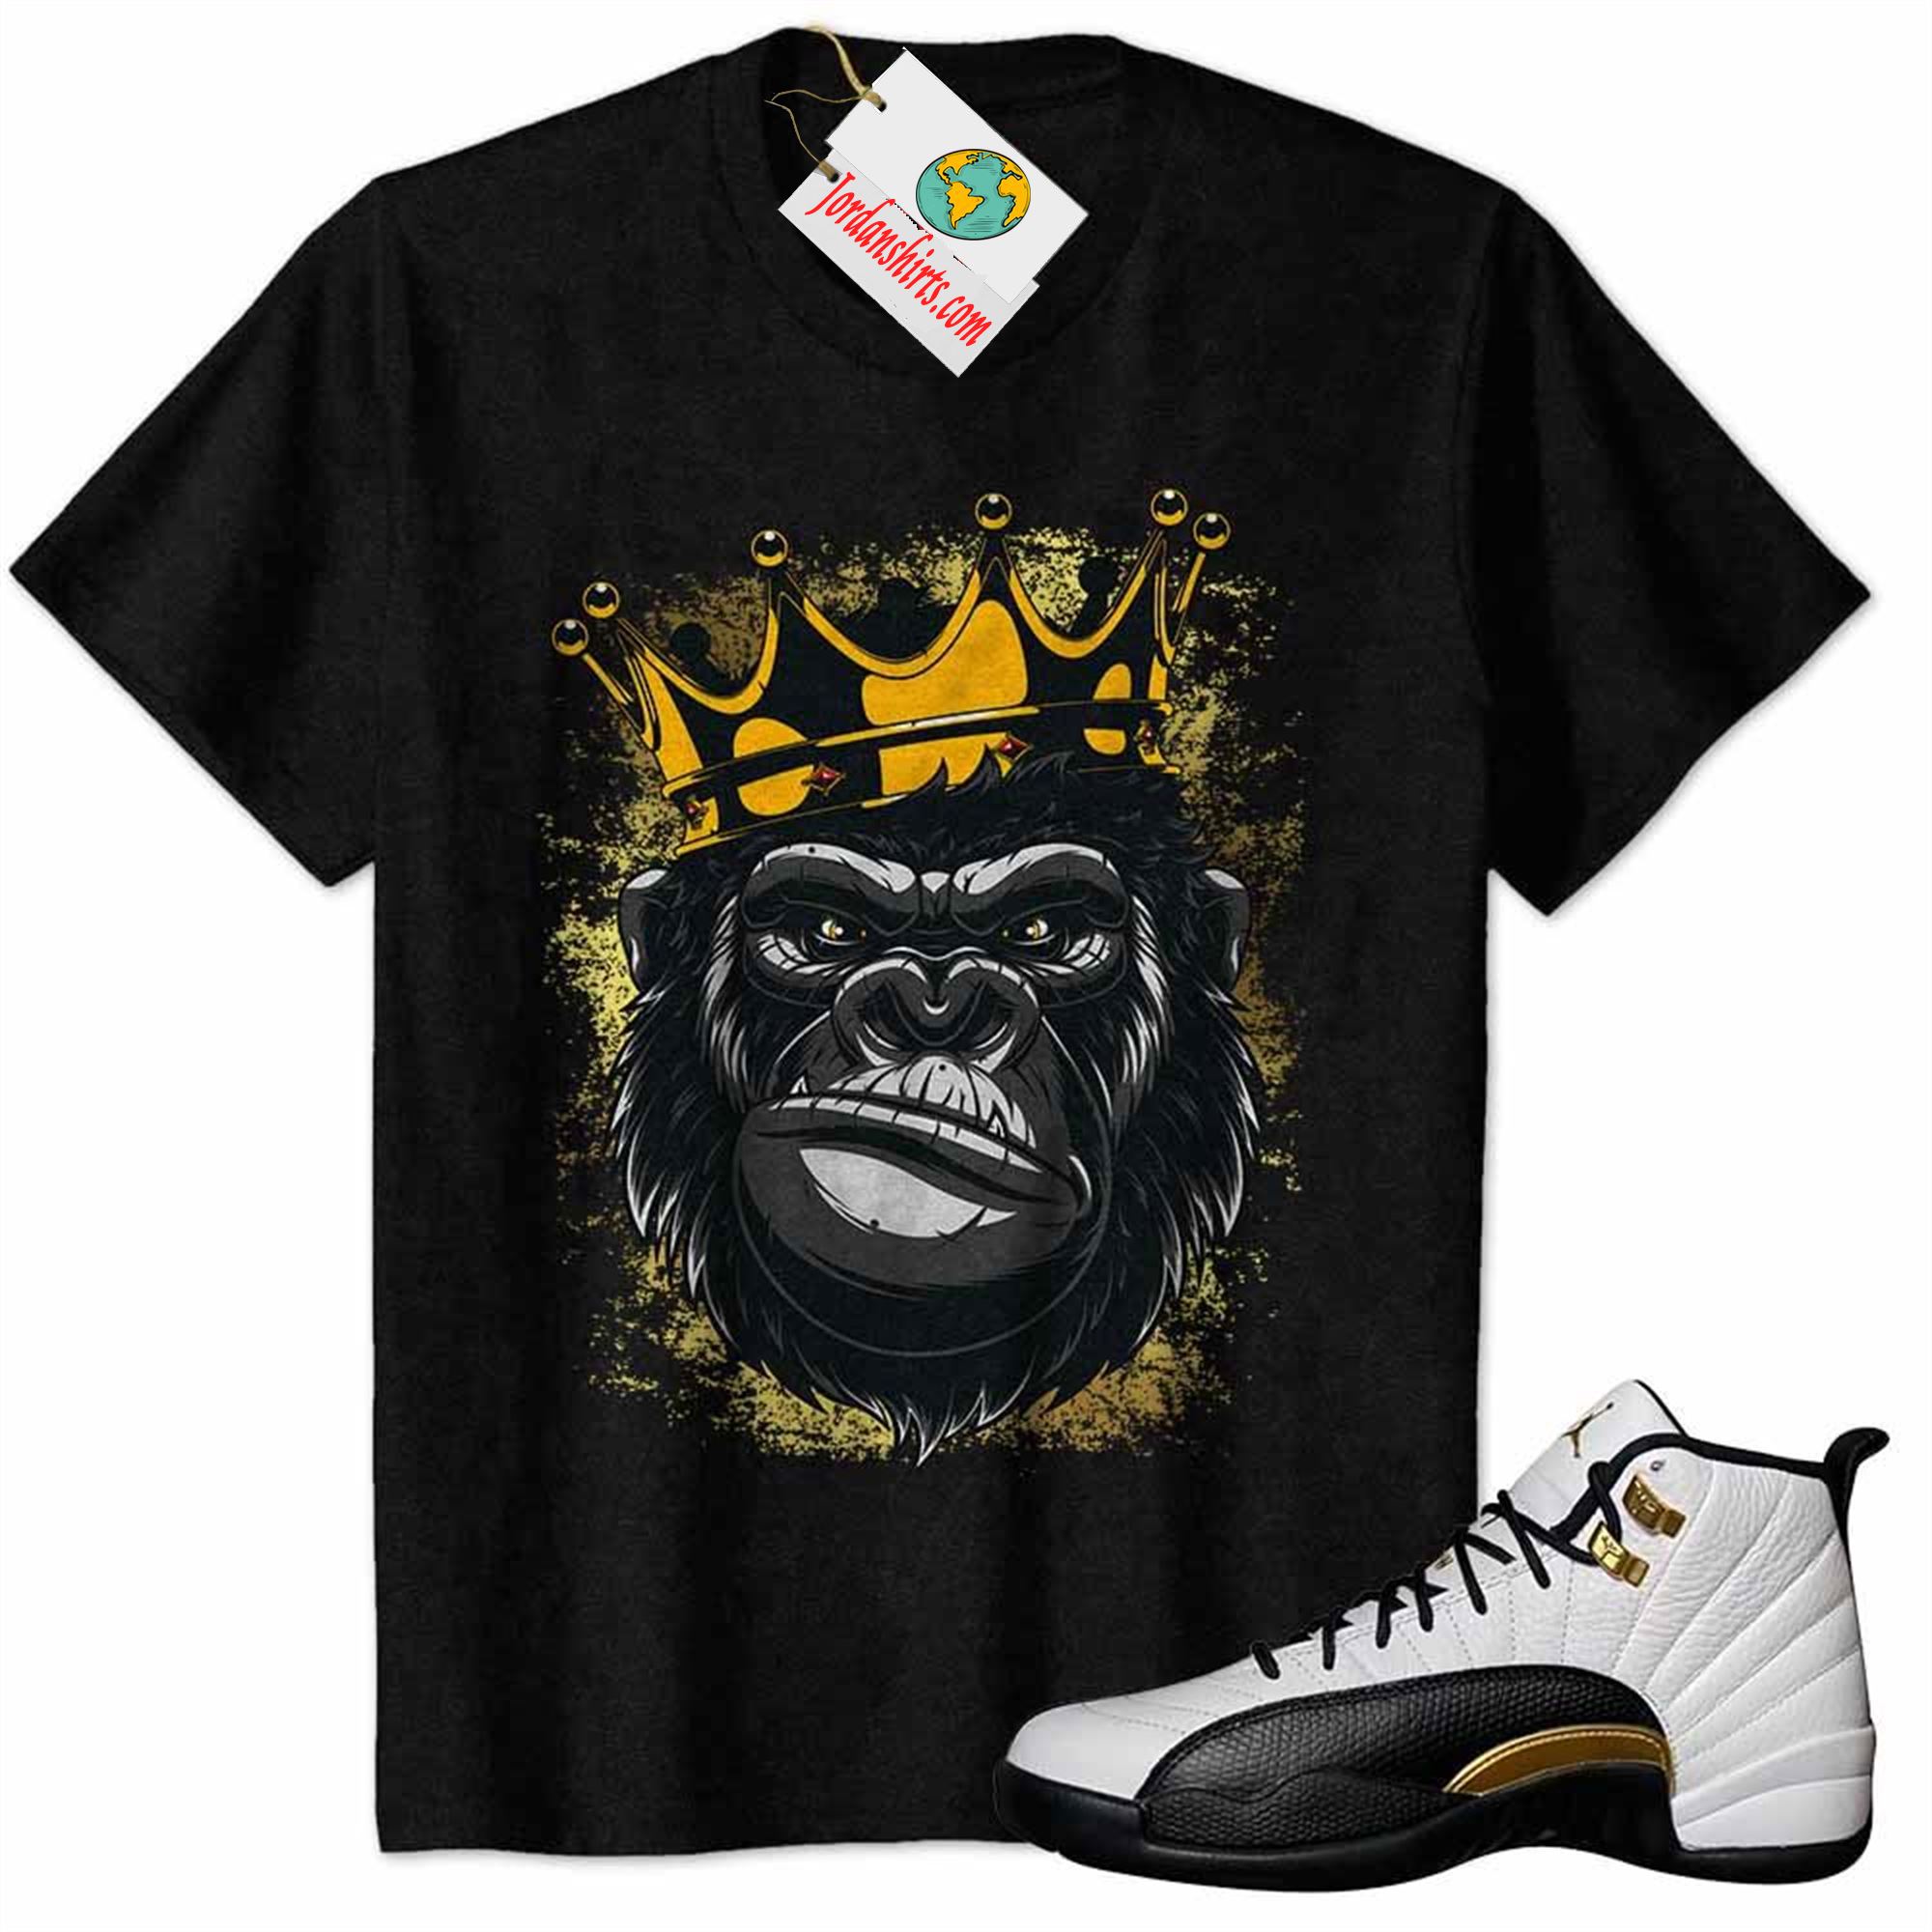 Jordan 12 Shirt, The Gorilla King With Crown Black Air Jordan 12 Royalty 12s Size Up To 5xl